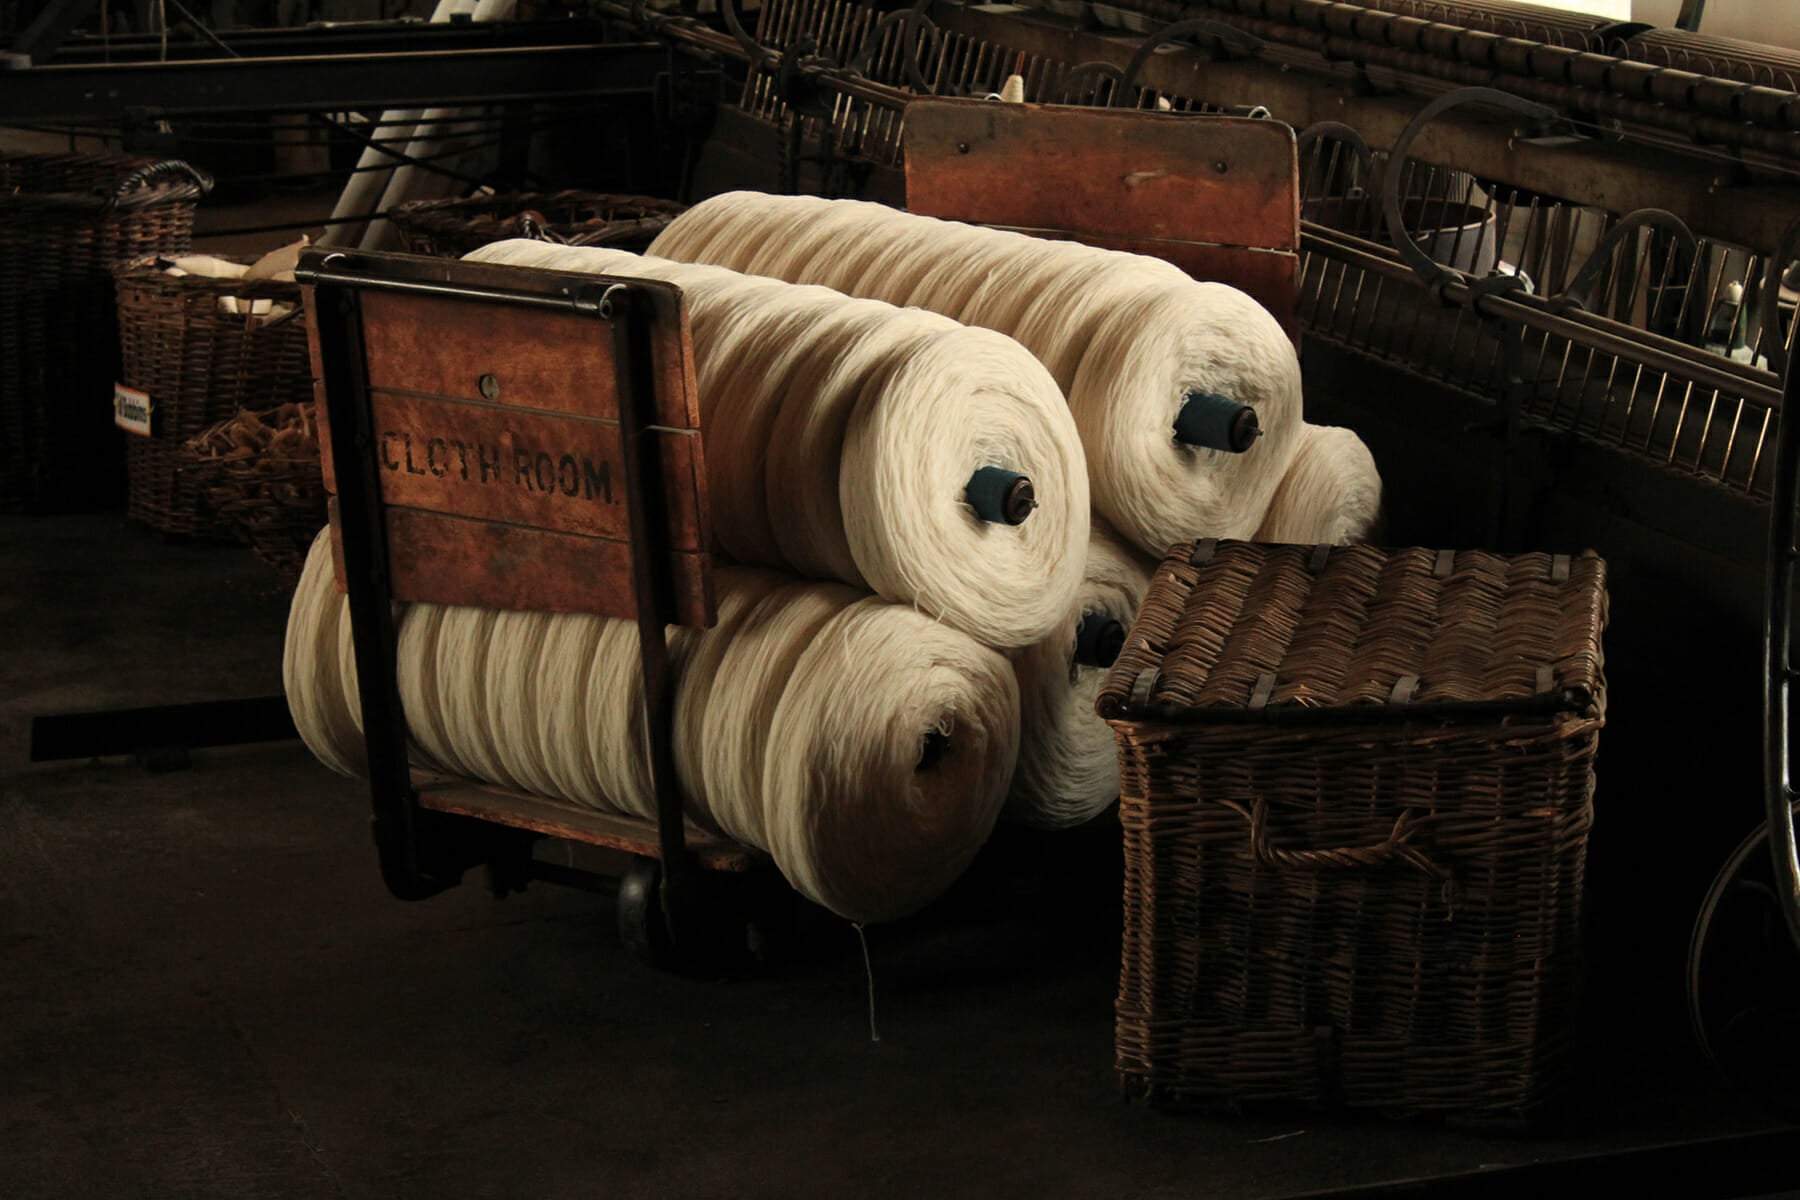 Wool producing